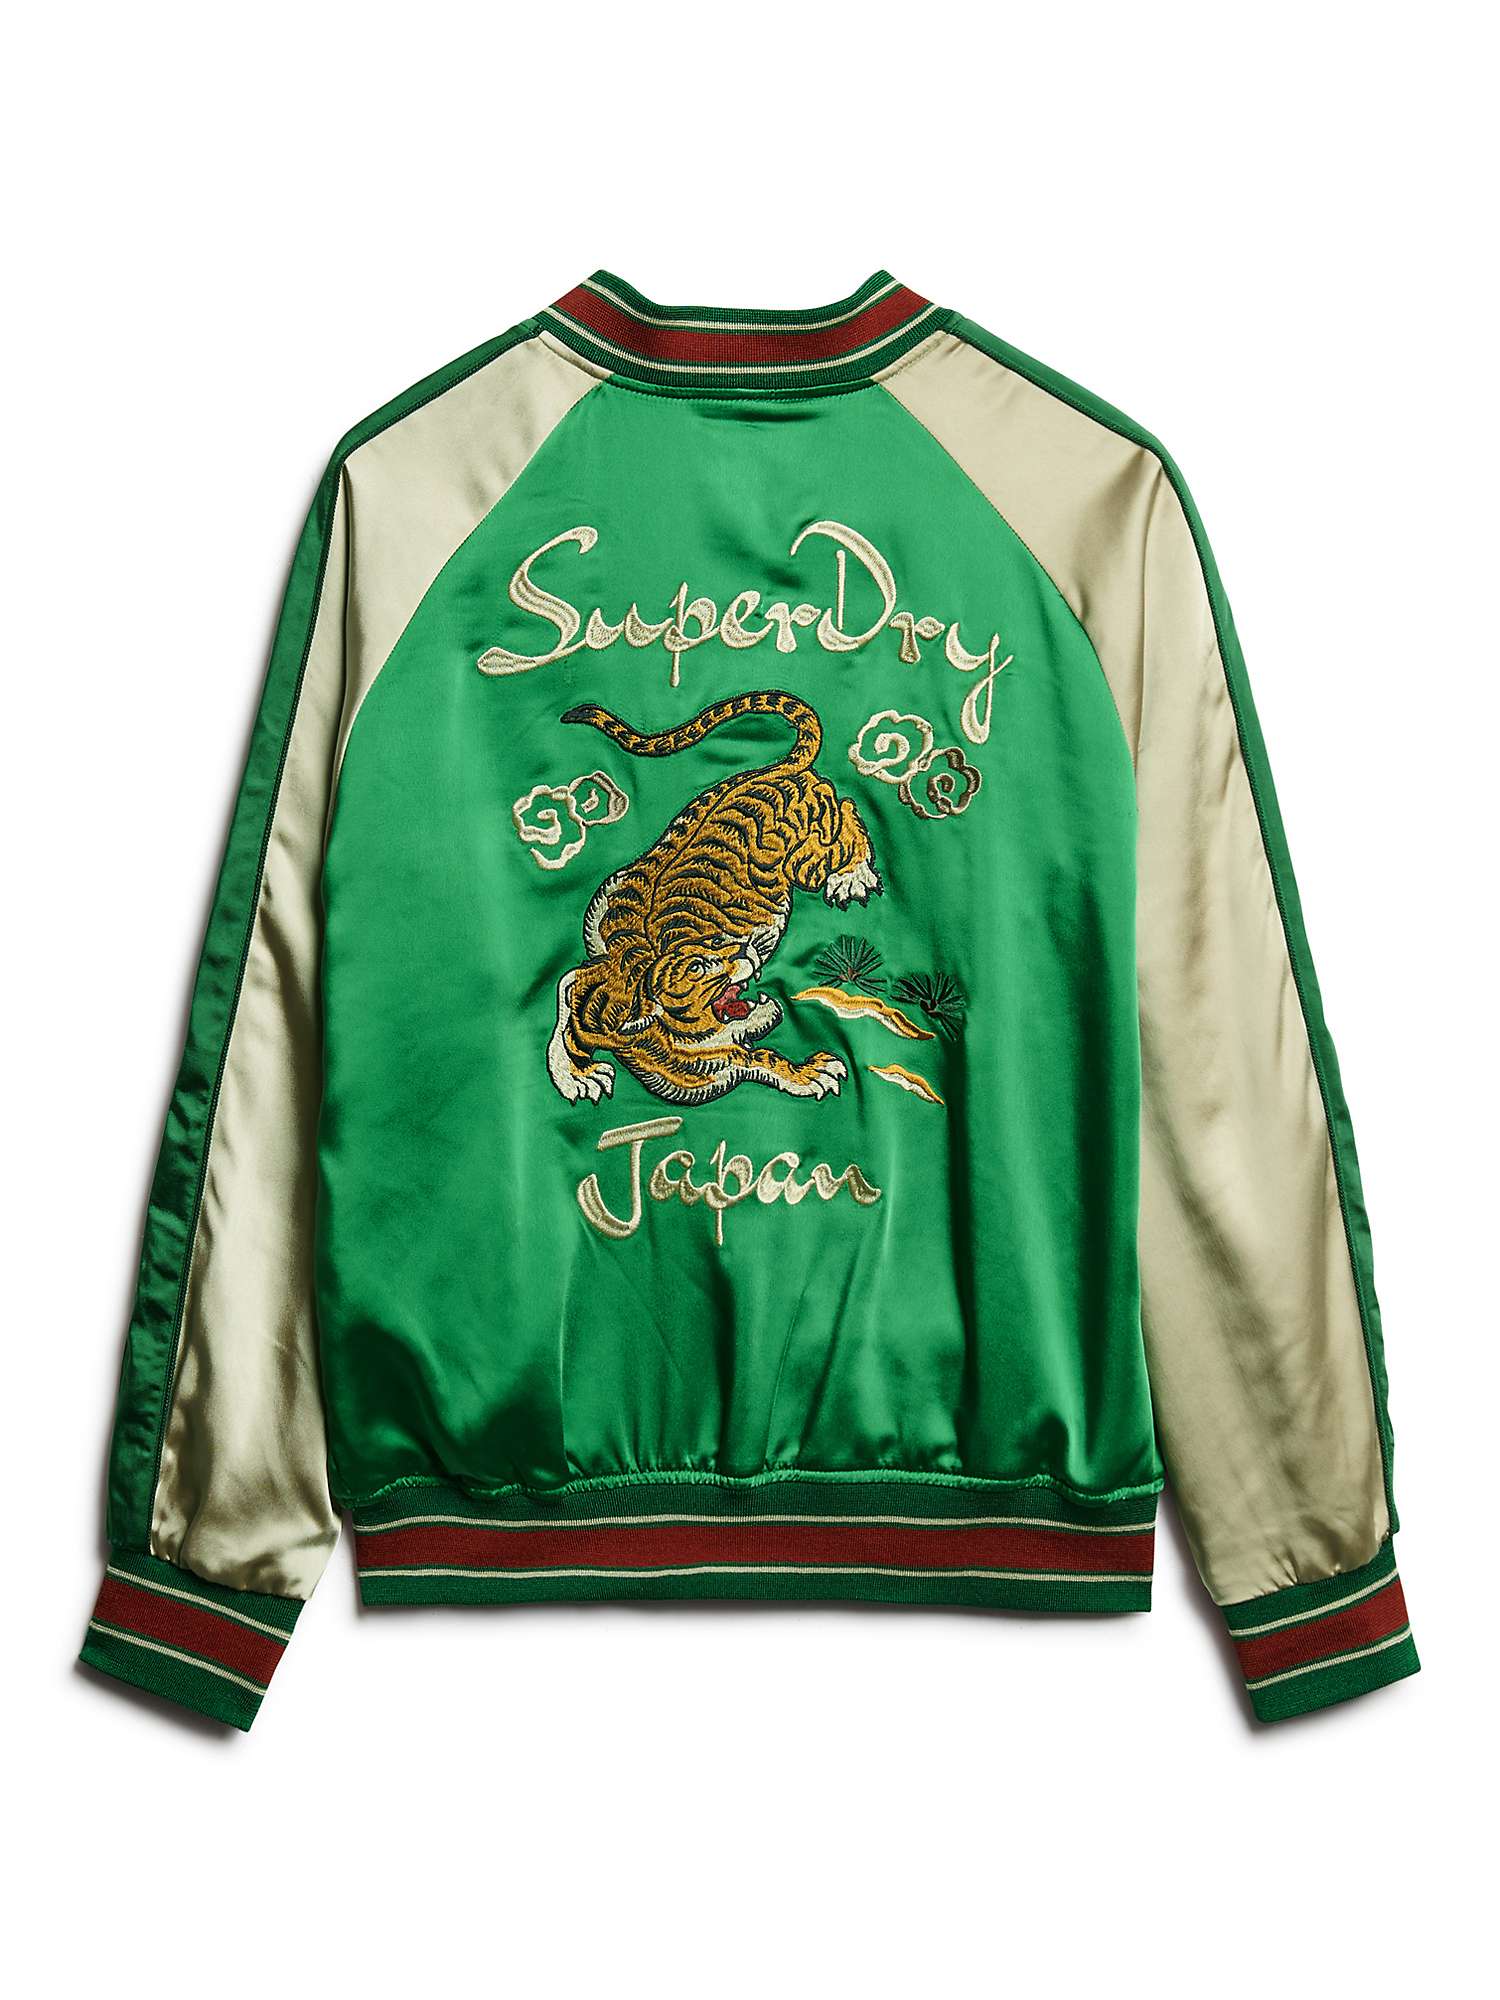 Buy Superdry Sukajan Embroidered Bomber Jacket, Bowling Green/Multi Online at johnlewis.com